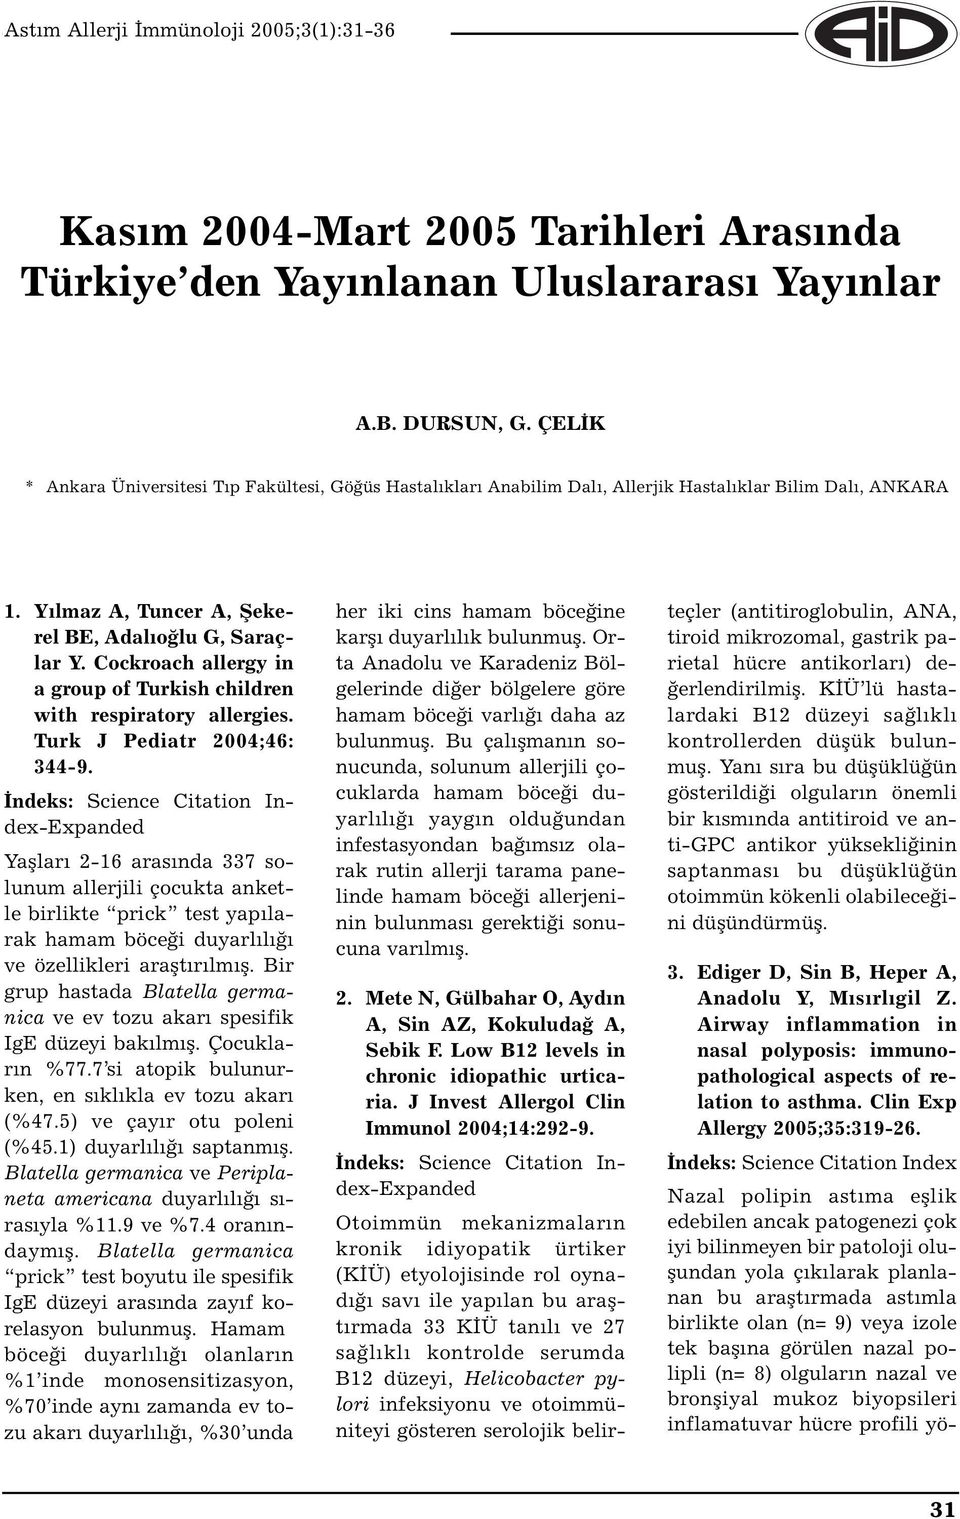 Cockroach allergy in a group of Turkish children with respiratory allergies. Turk J Pediatr 2004;46: 344-9.